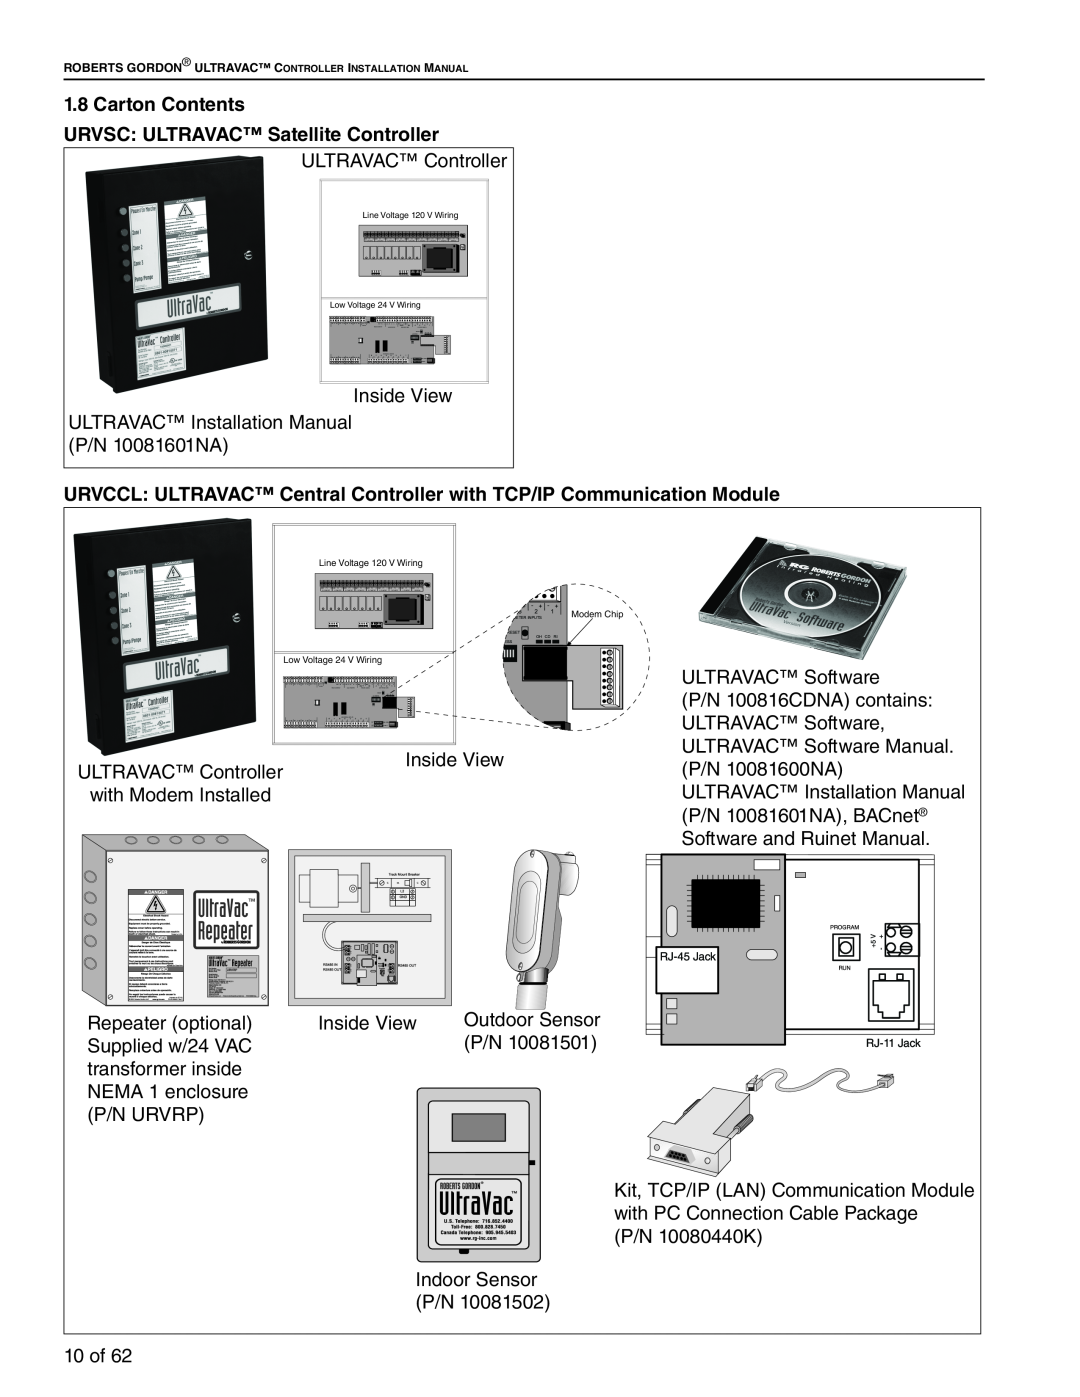 Roberts Gorden 10081601NA Rev H 12/11 service manual Carton Contents, URVSC: ULTRAVAC Satellite Controller 